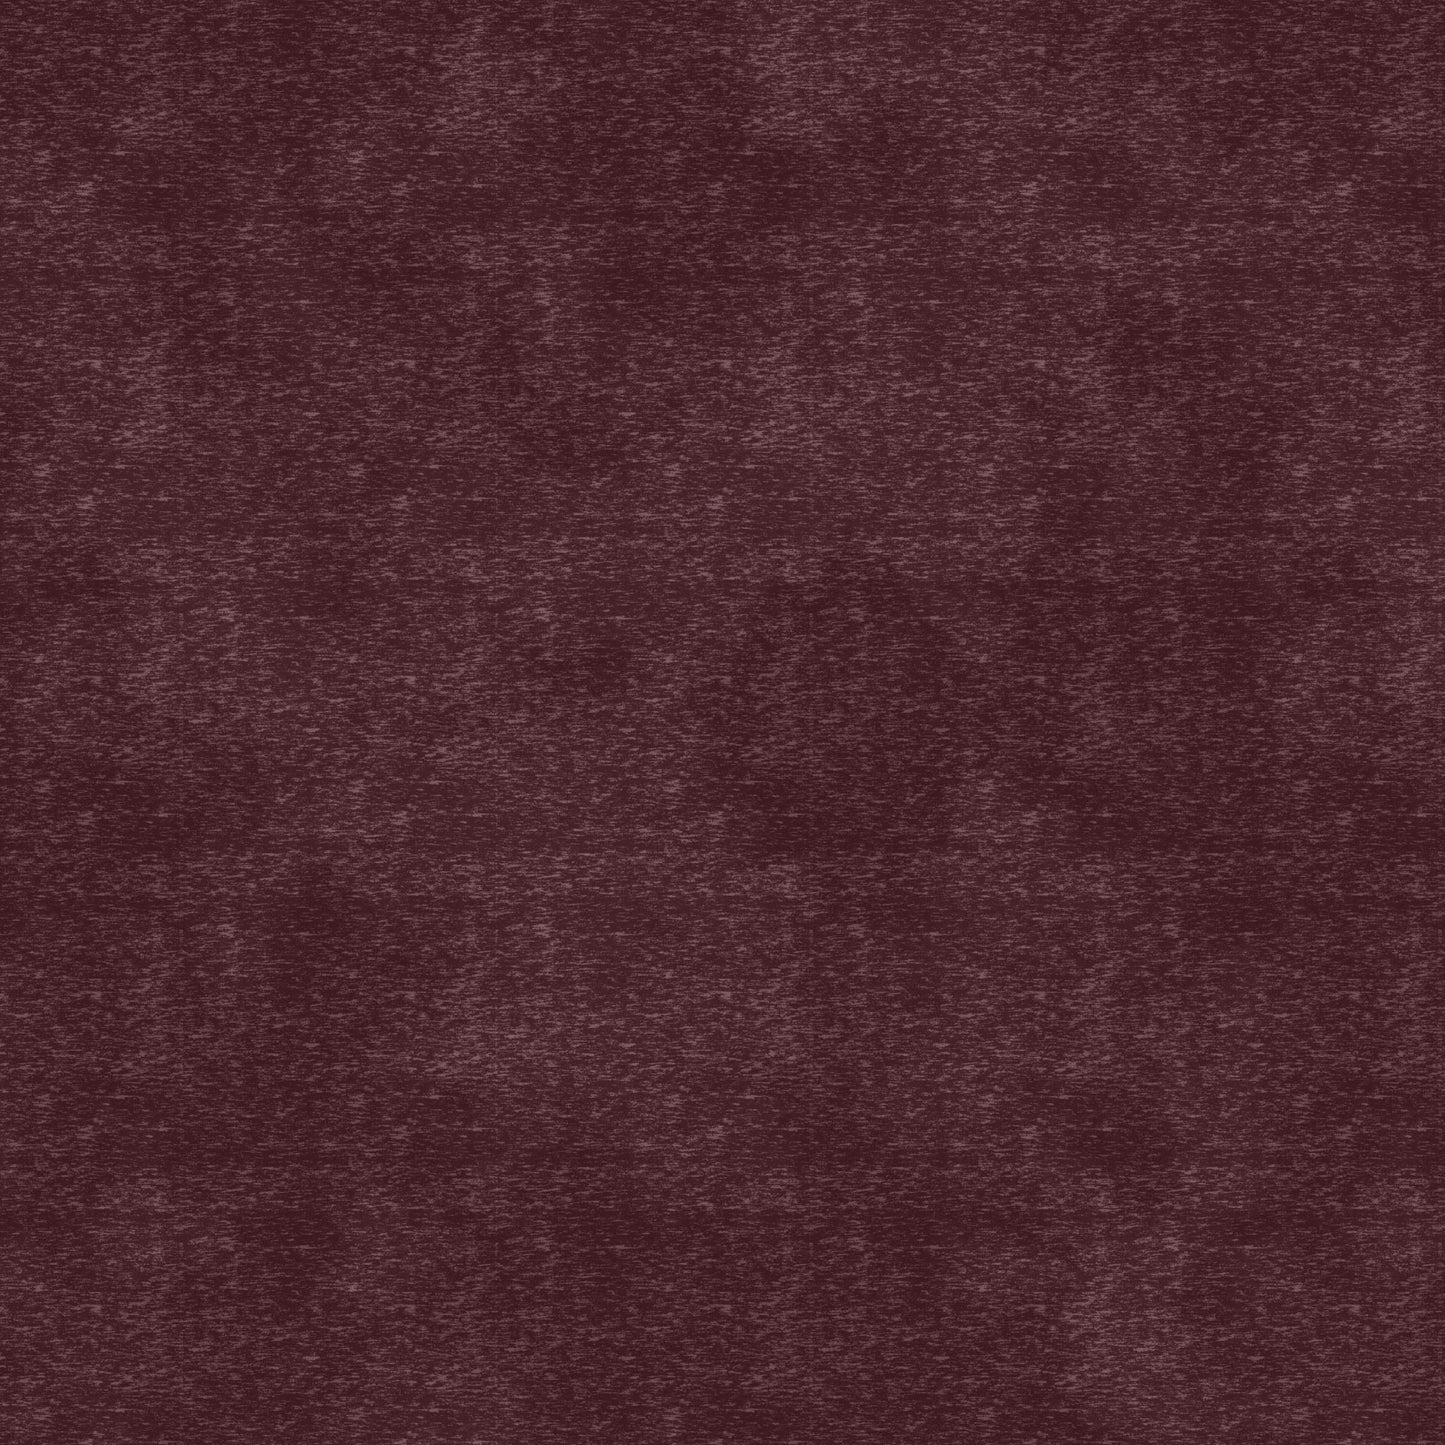 Burgundy Heather Fabric - WayMaker Fabrics